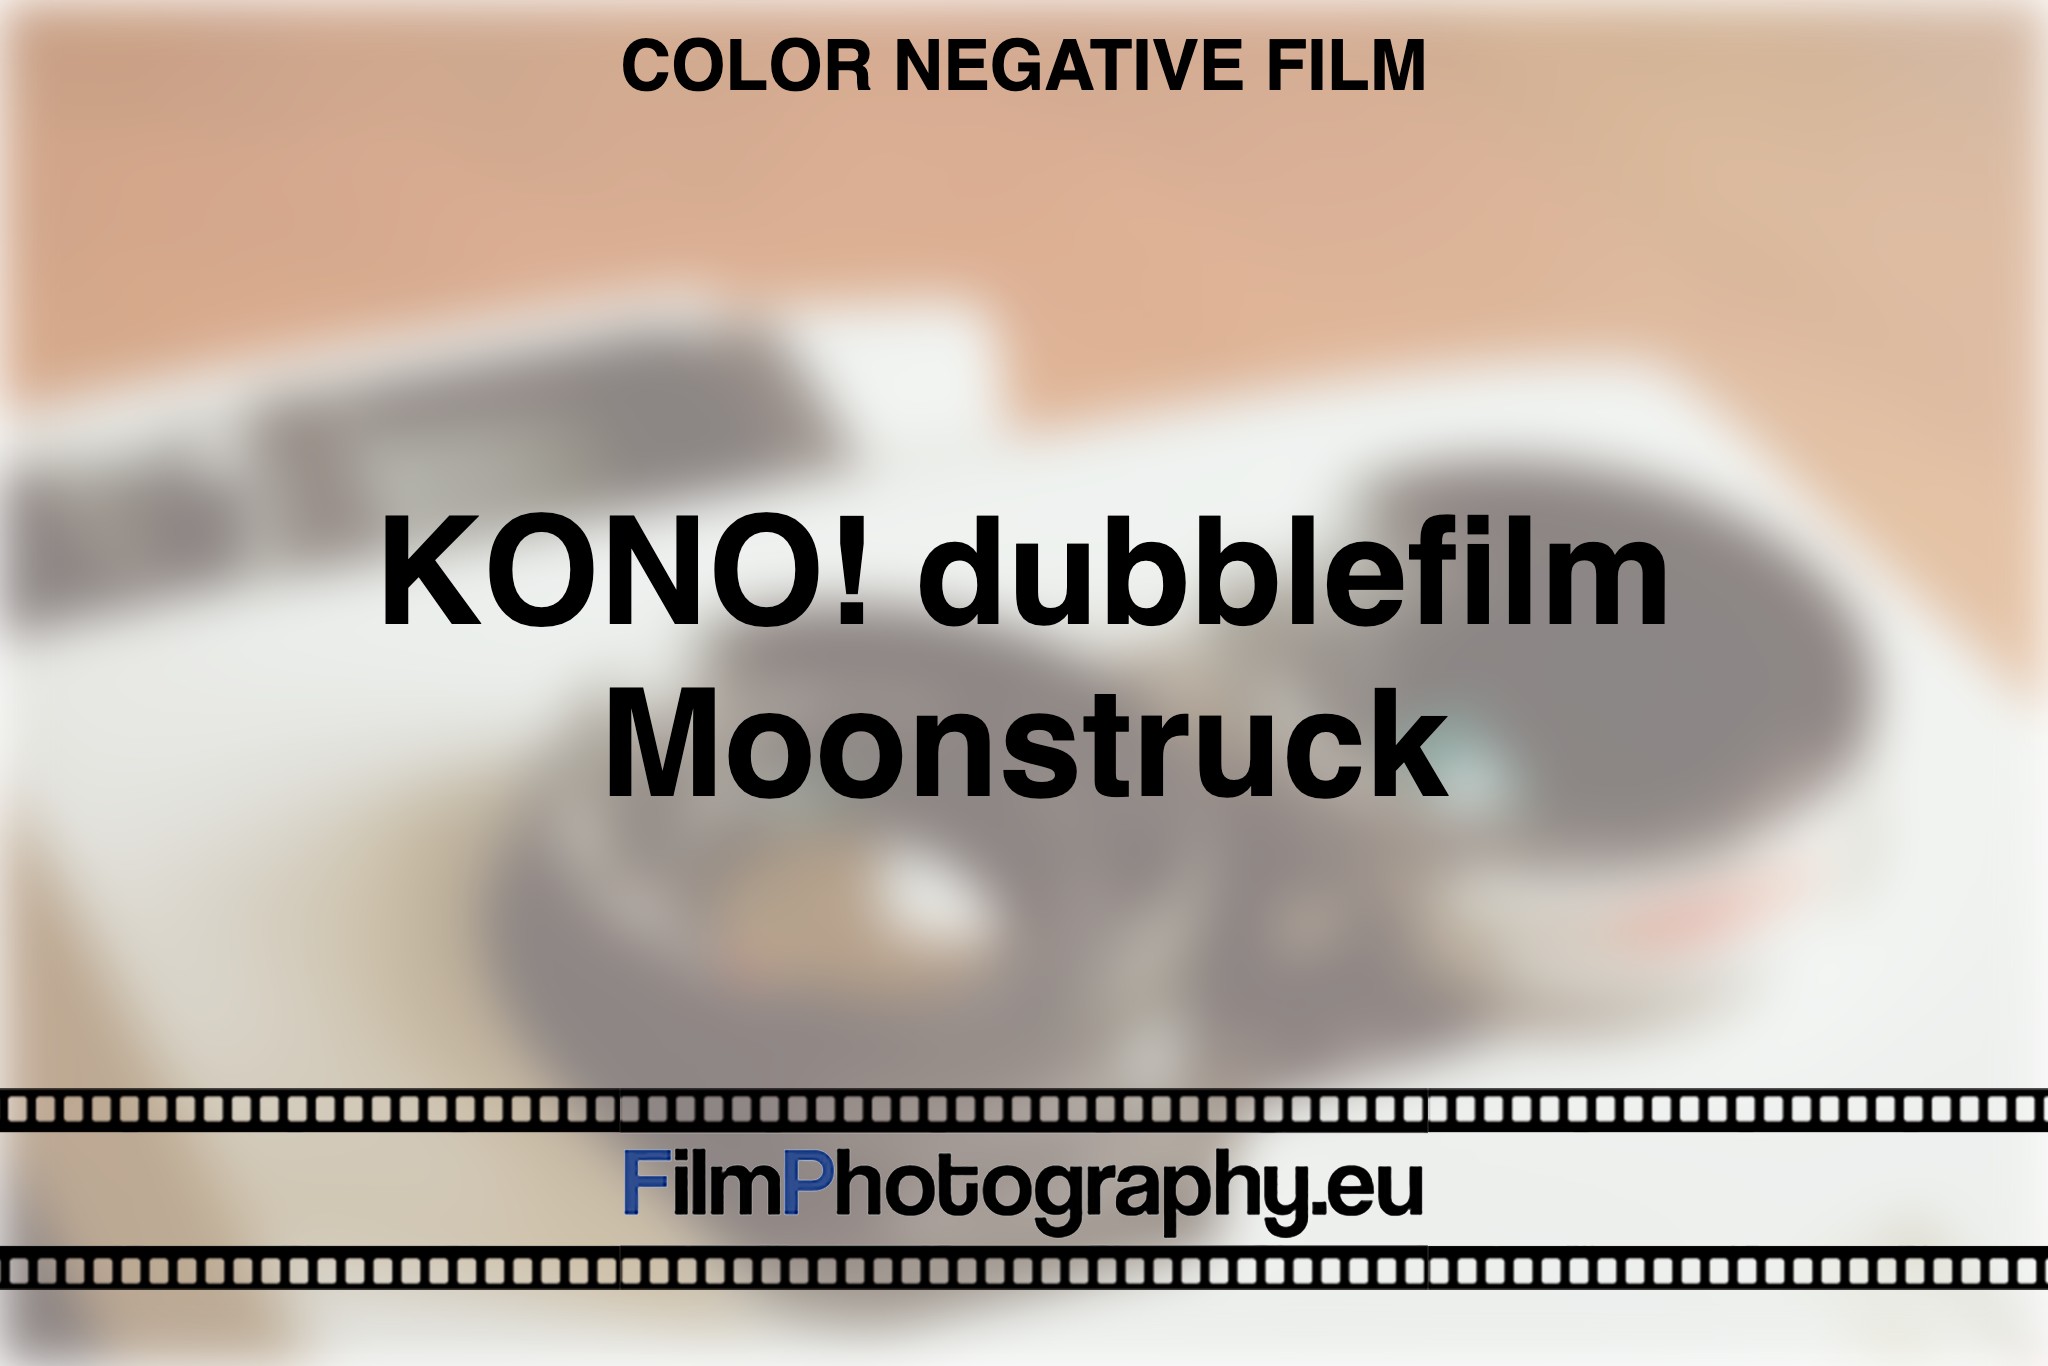 kono-dubblefilm-moonstruck-color-negative-film-bnv